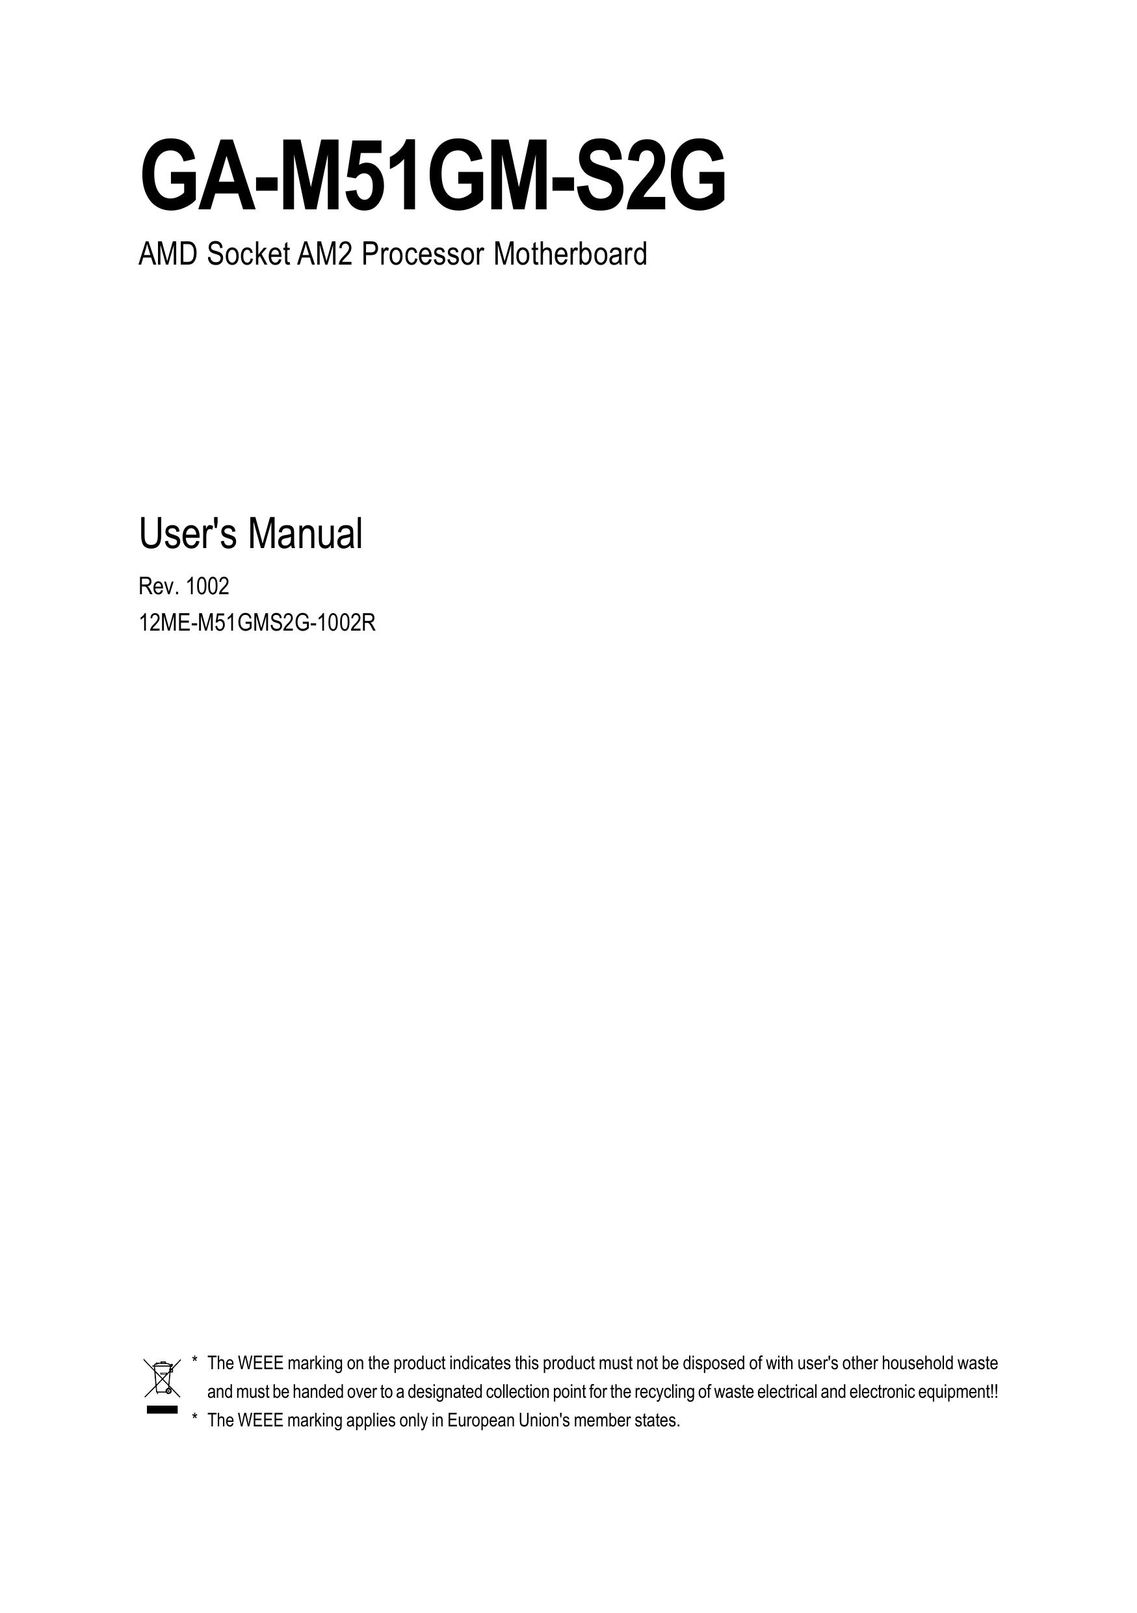 AMD GA-M51GM-S2G Computer Hardware User Manual